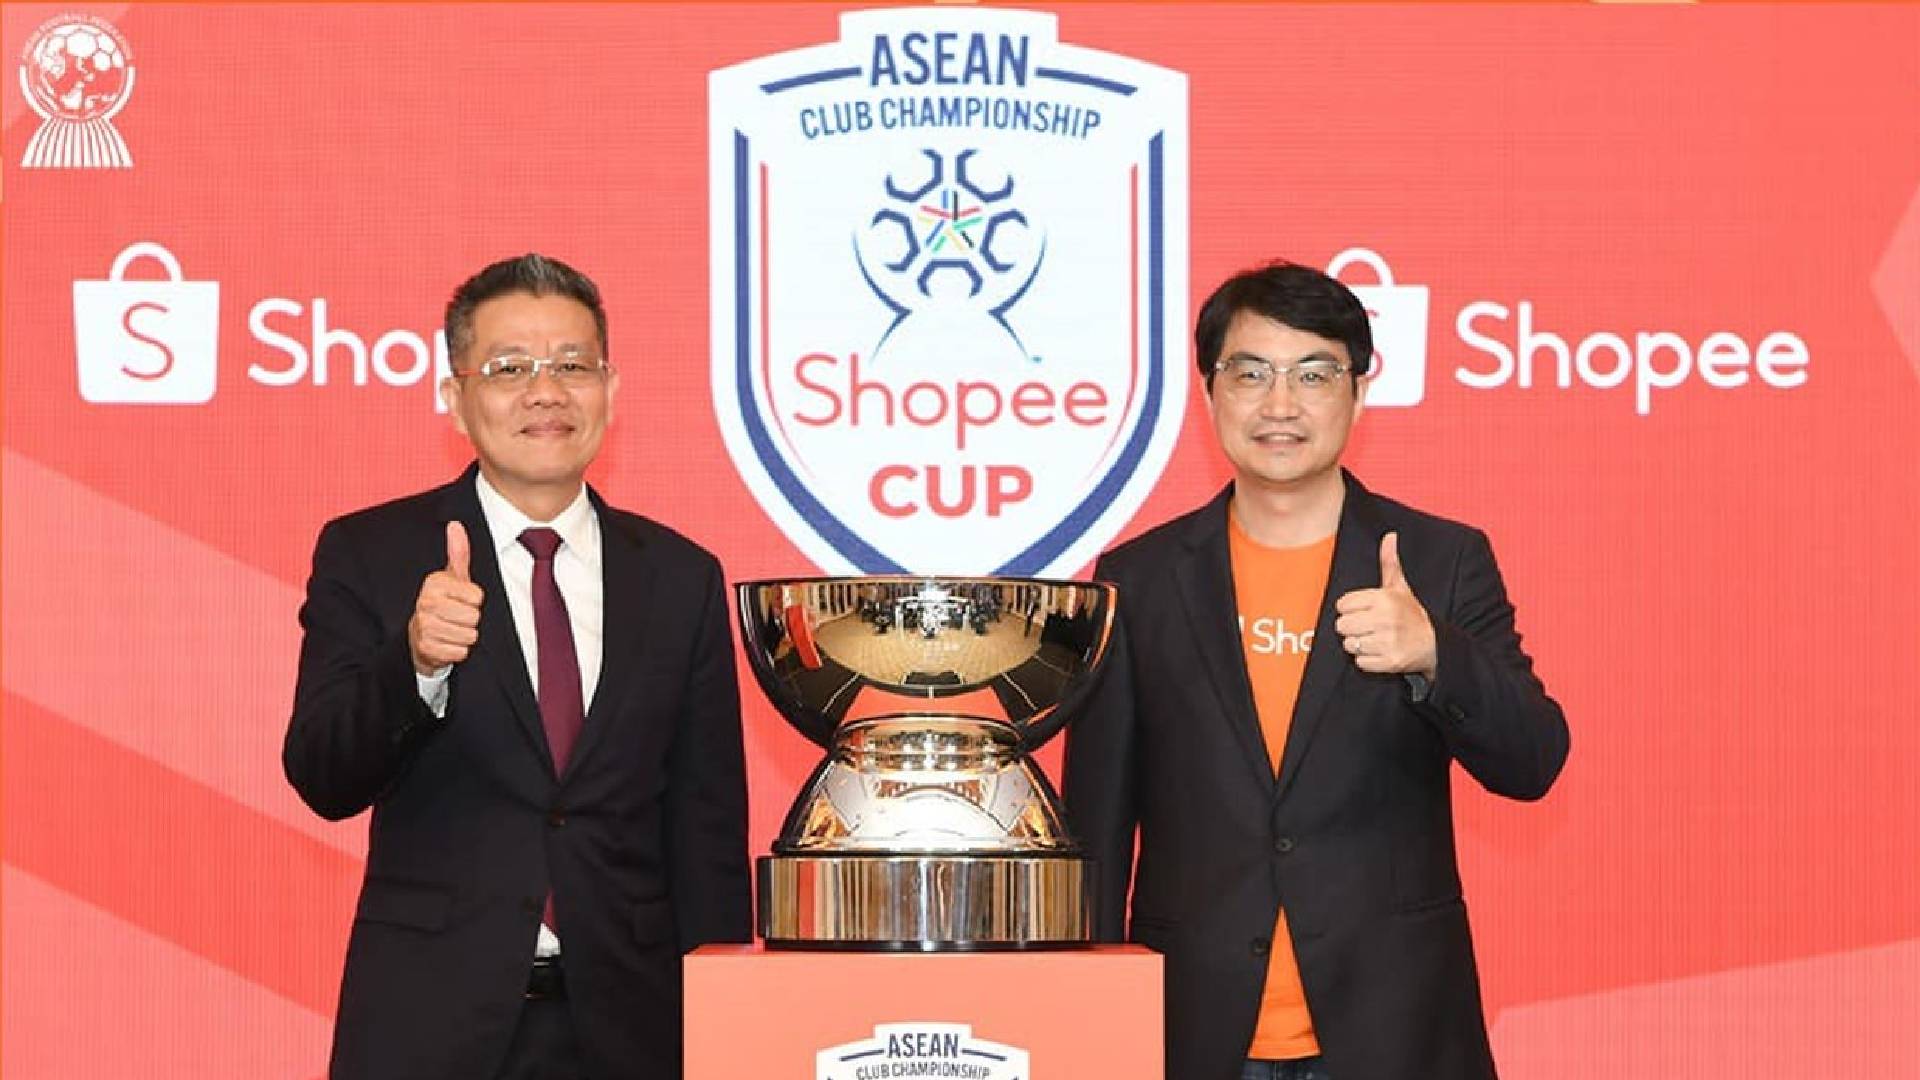 Asean Club Championship Kini Dikenali Sebagai Shopee Cup